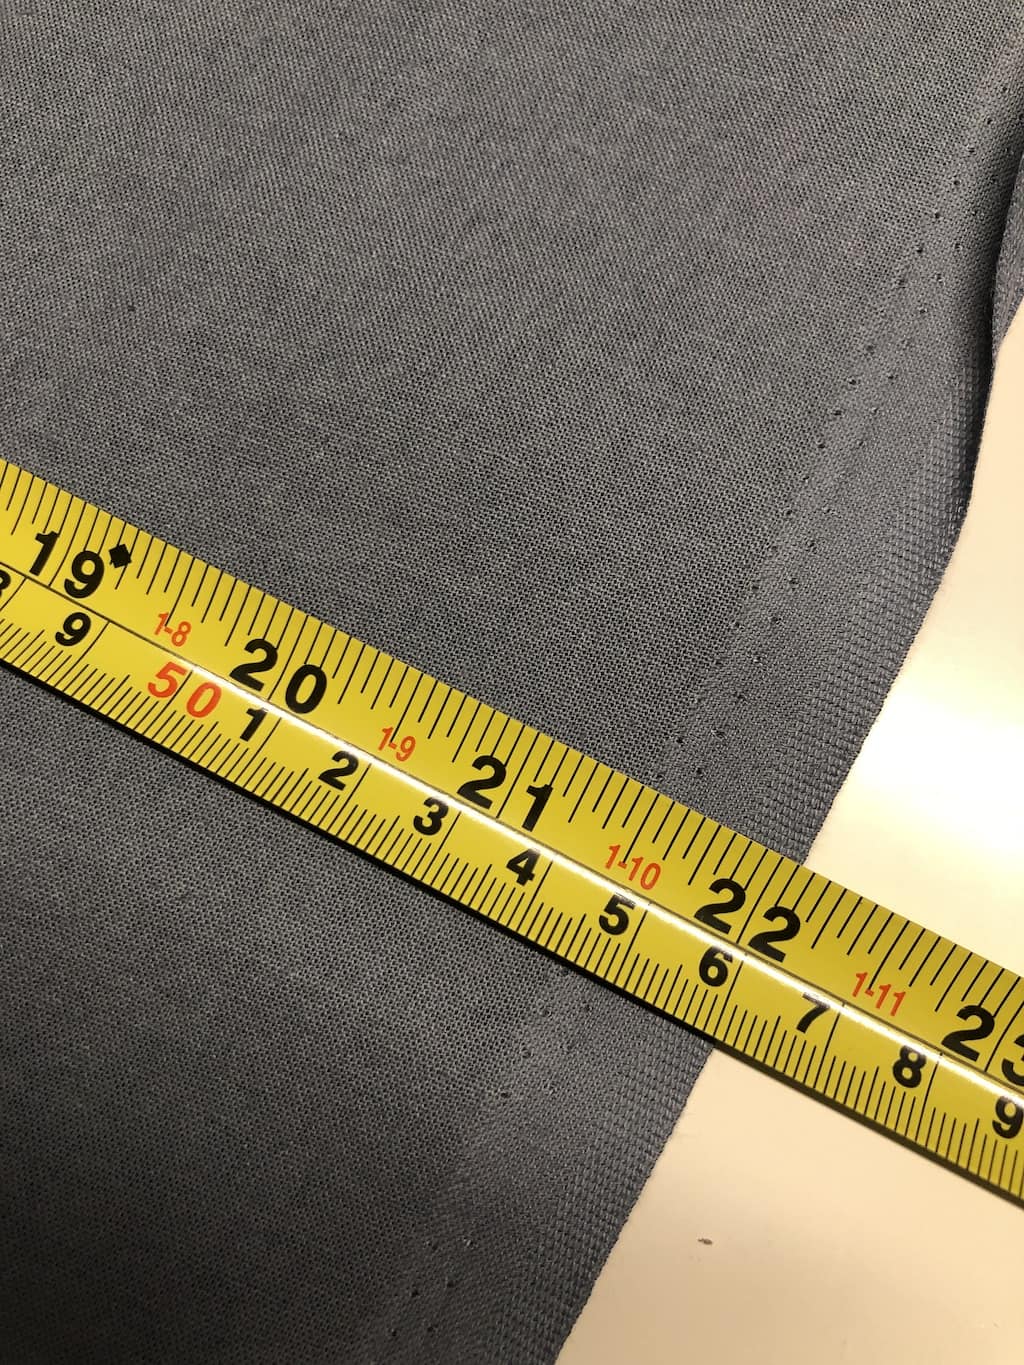 Plain Grey - 100% Cotton - Wallington Sewing TheraBee